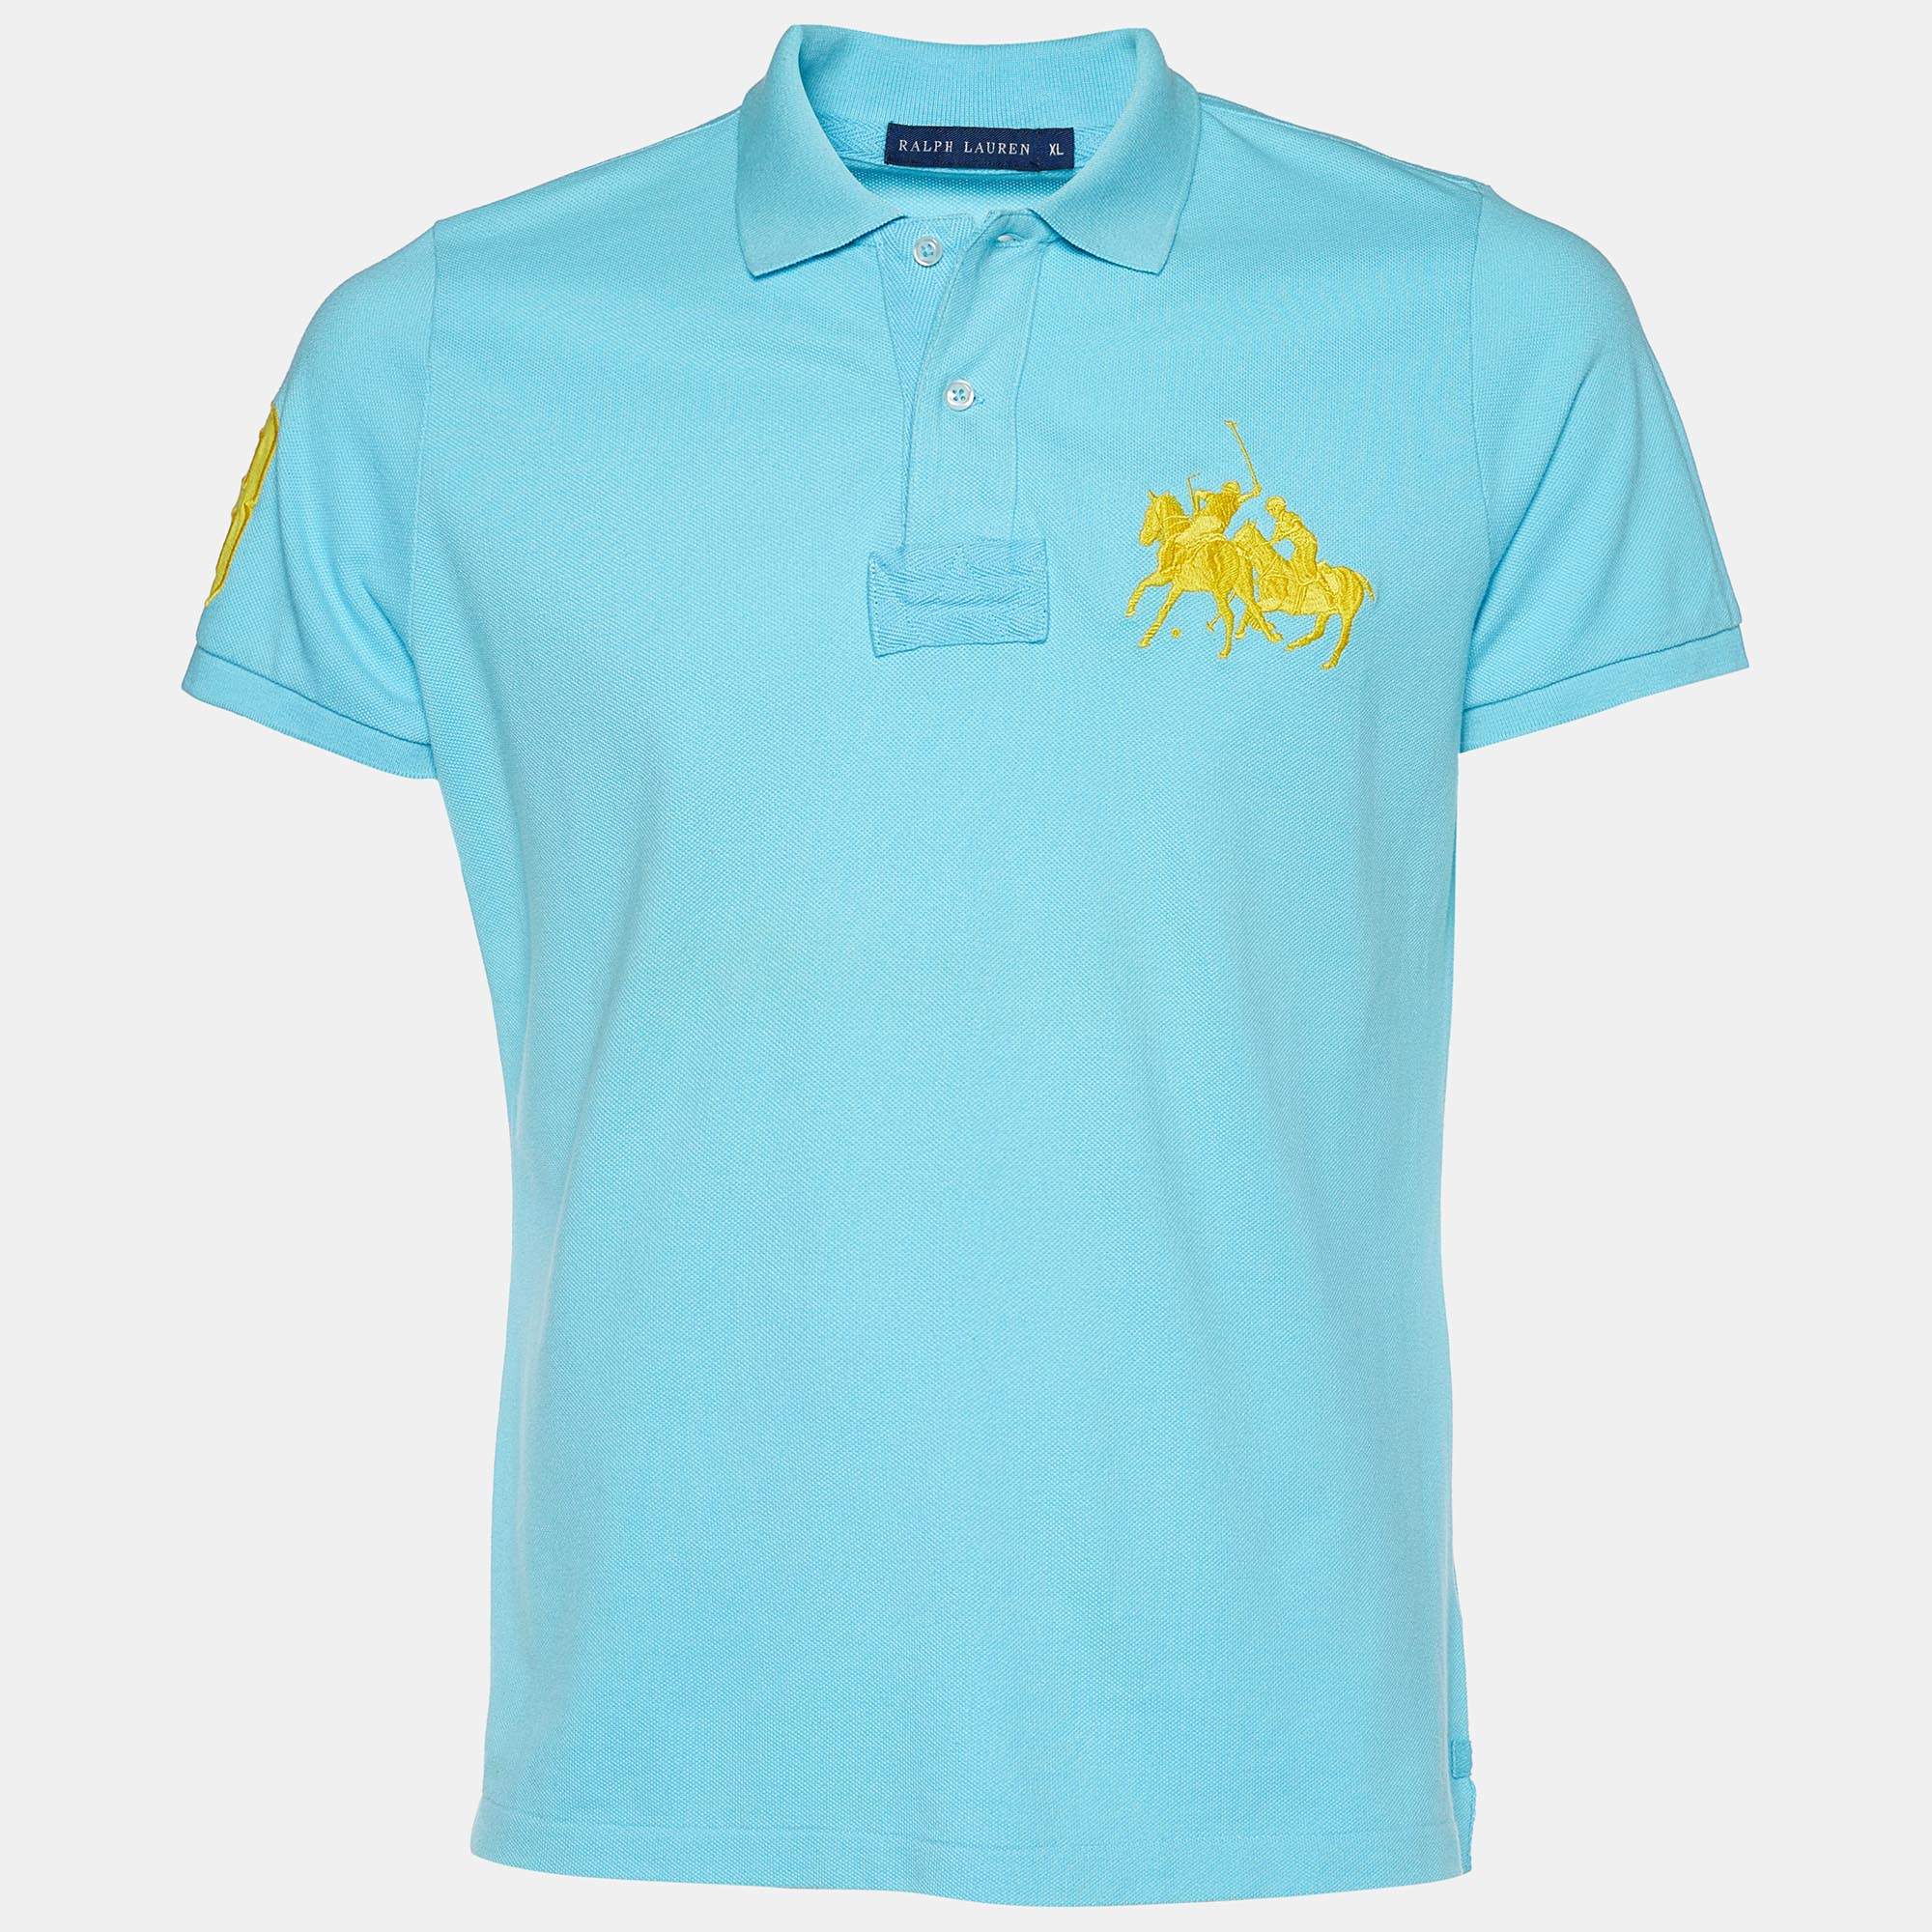 Ralph Lauren Blue Cotton Pique Double Pony Embroidered Polo T-Shirt XL